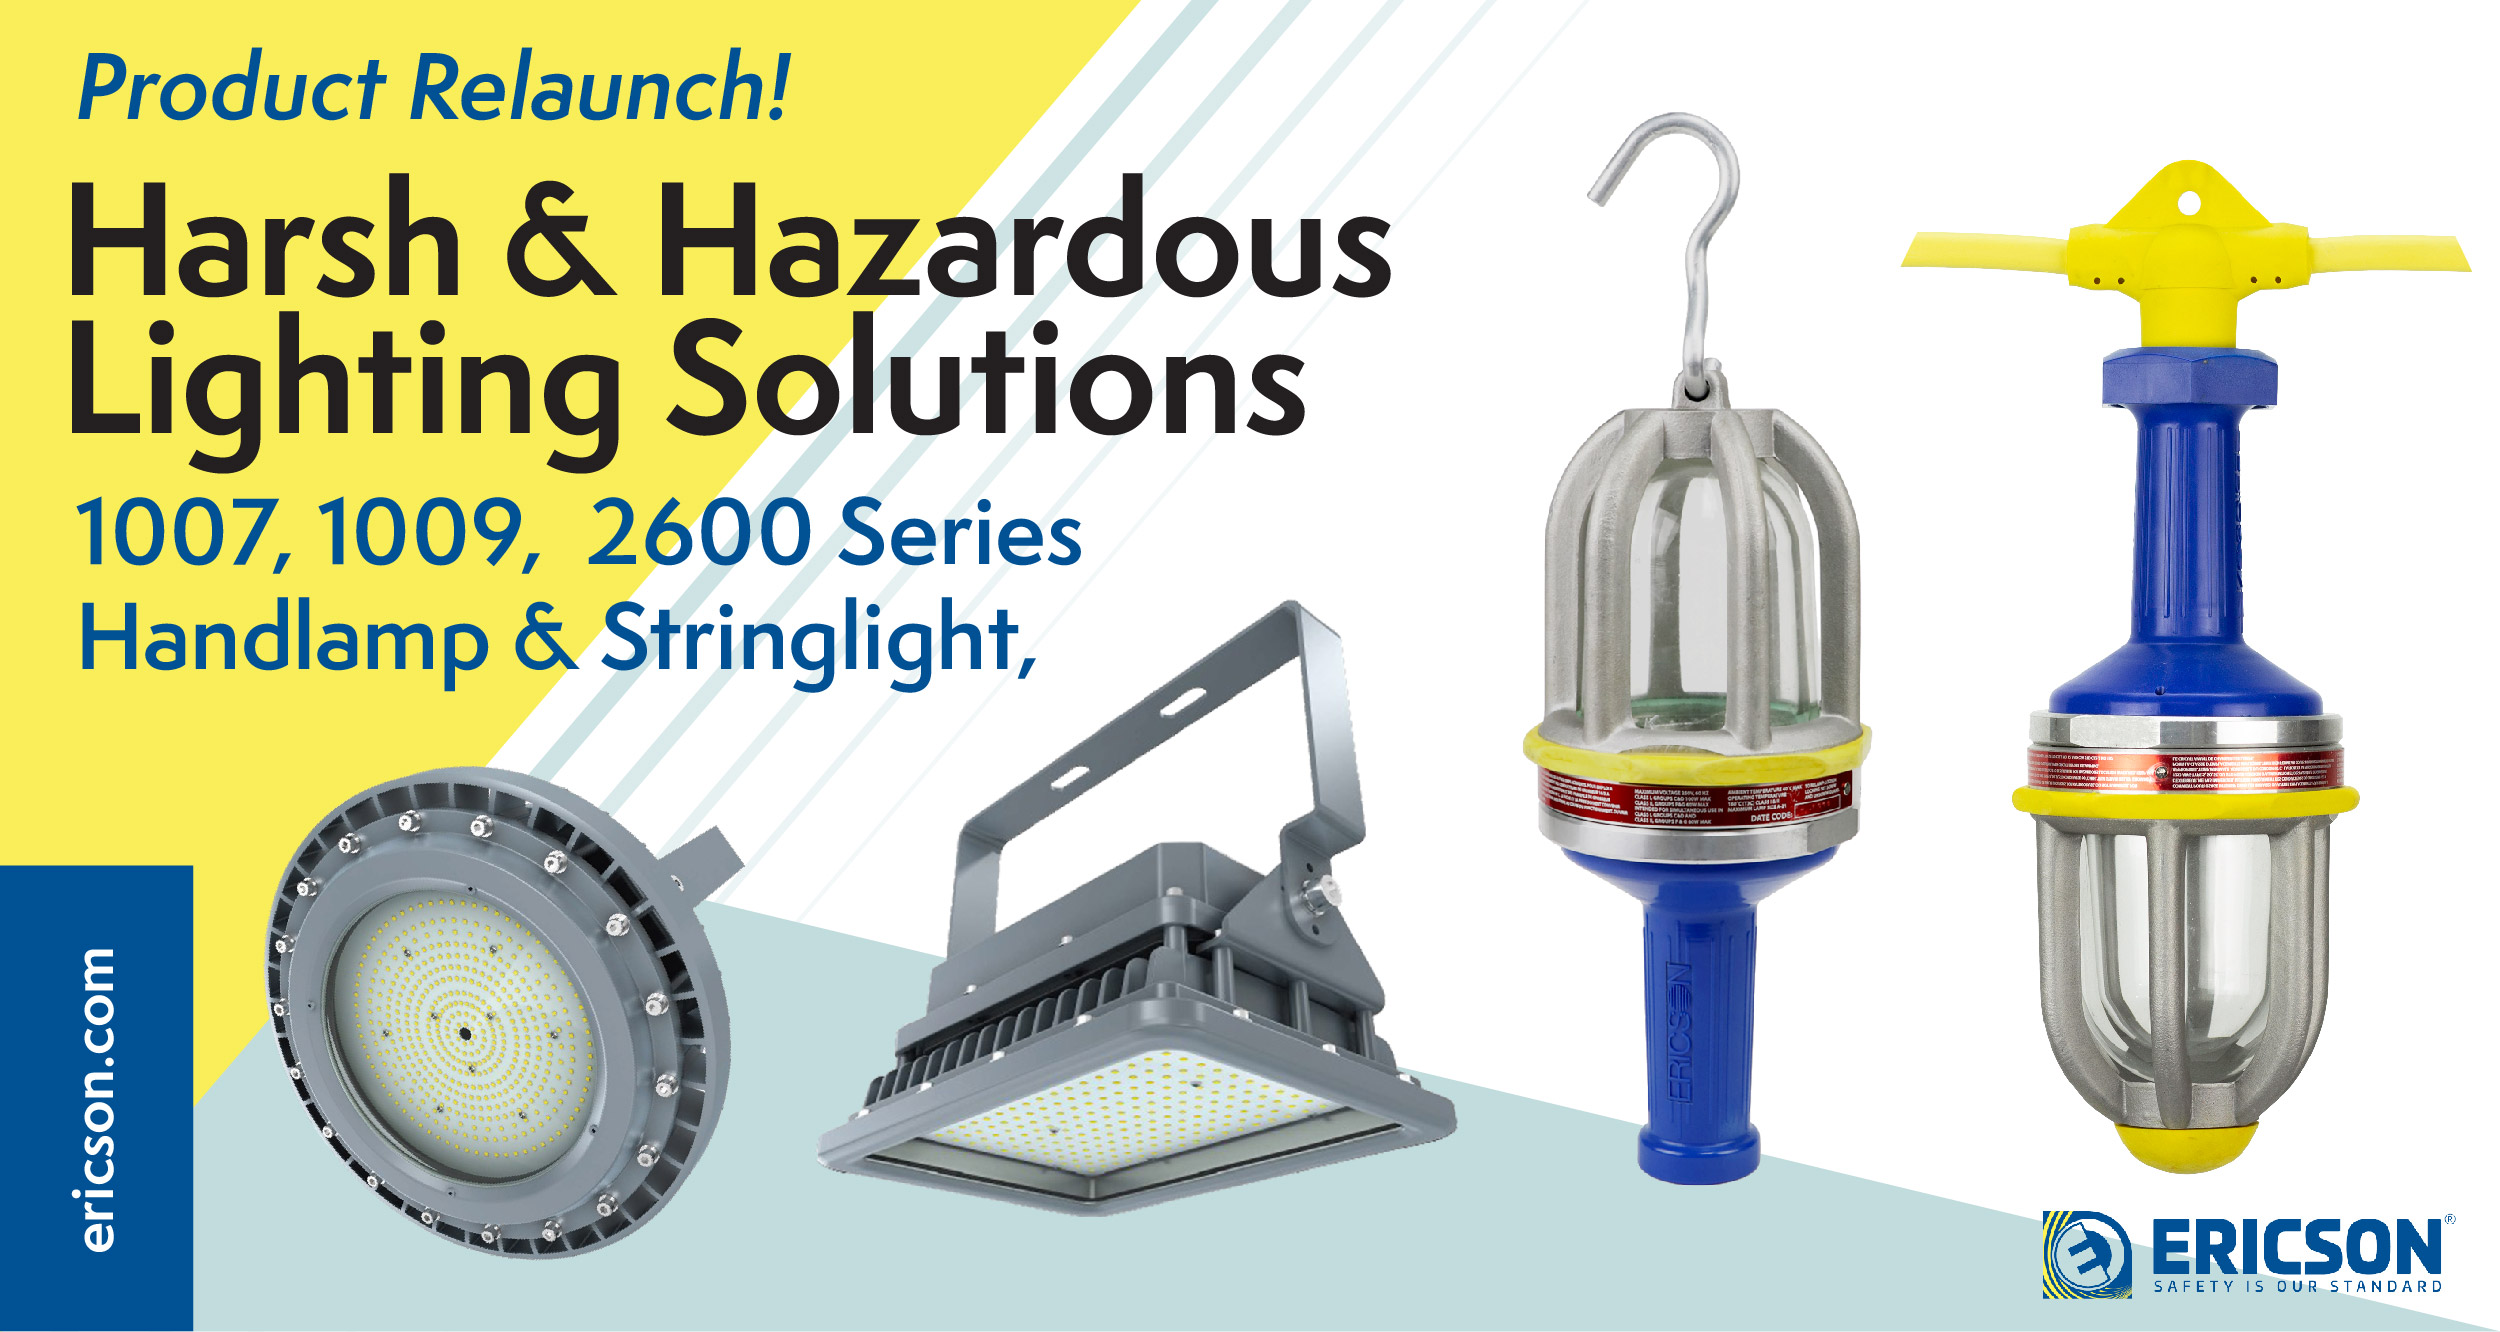 Product Relaunch - Harsh & Hazardous Lighting Solutions